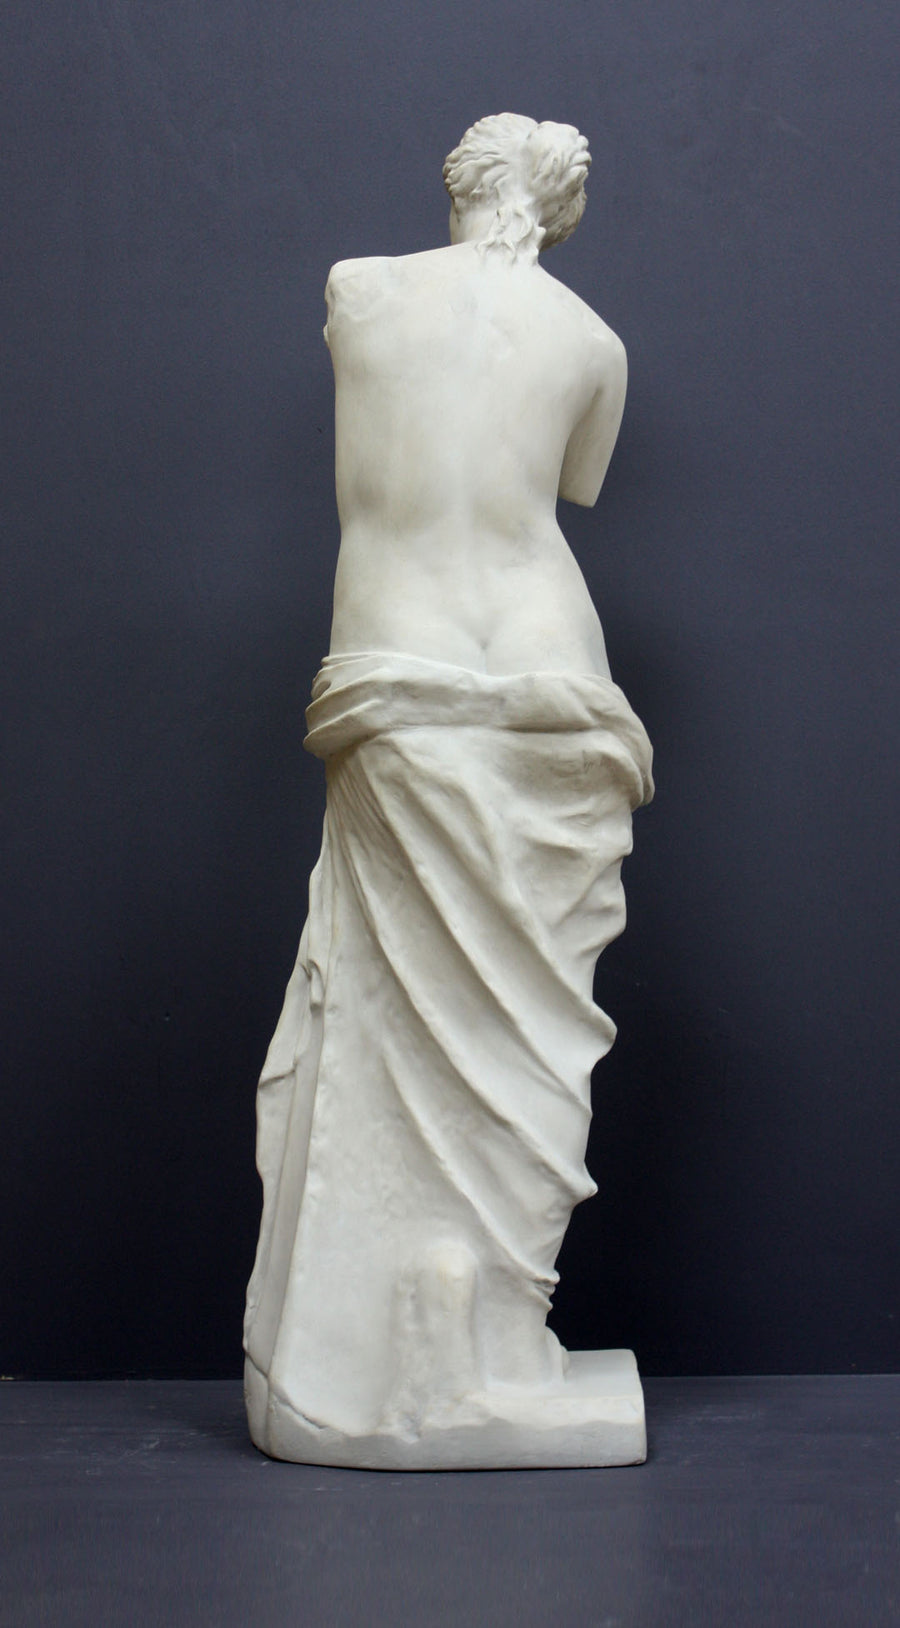 Photo of plaster cast sculpture reproduction of Venus de Melo, back view, on a grey background